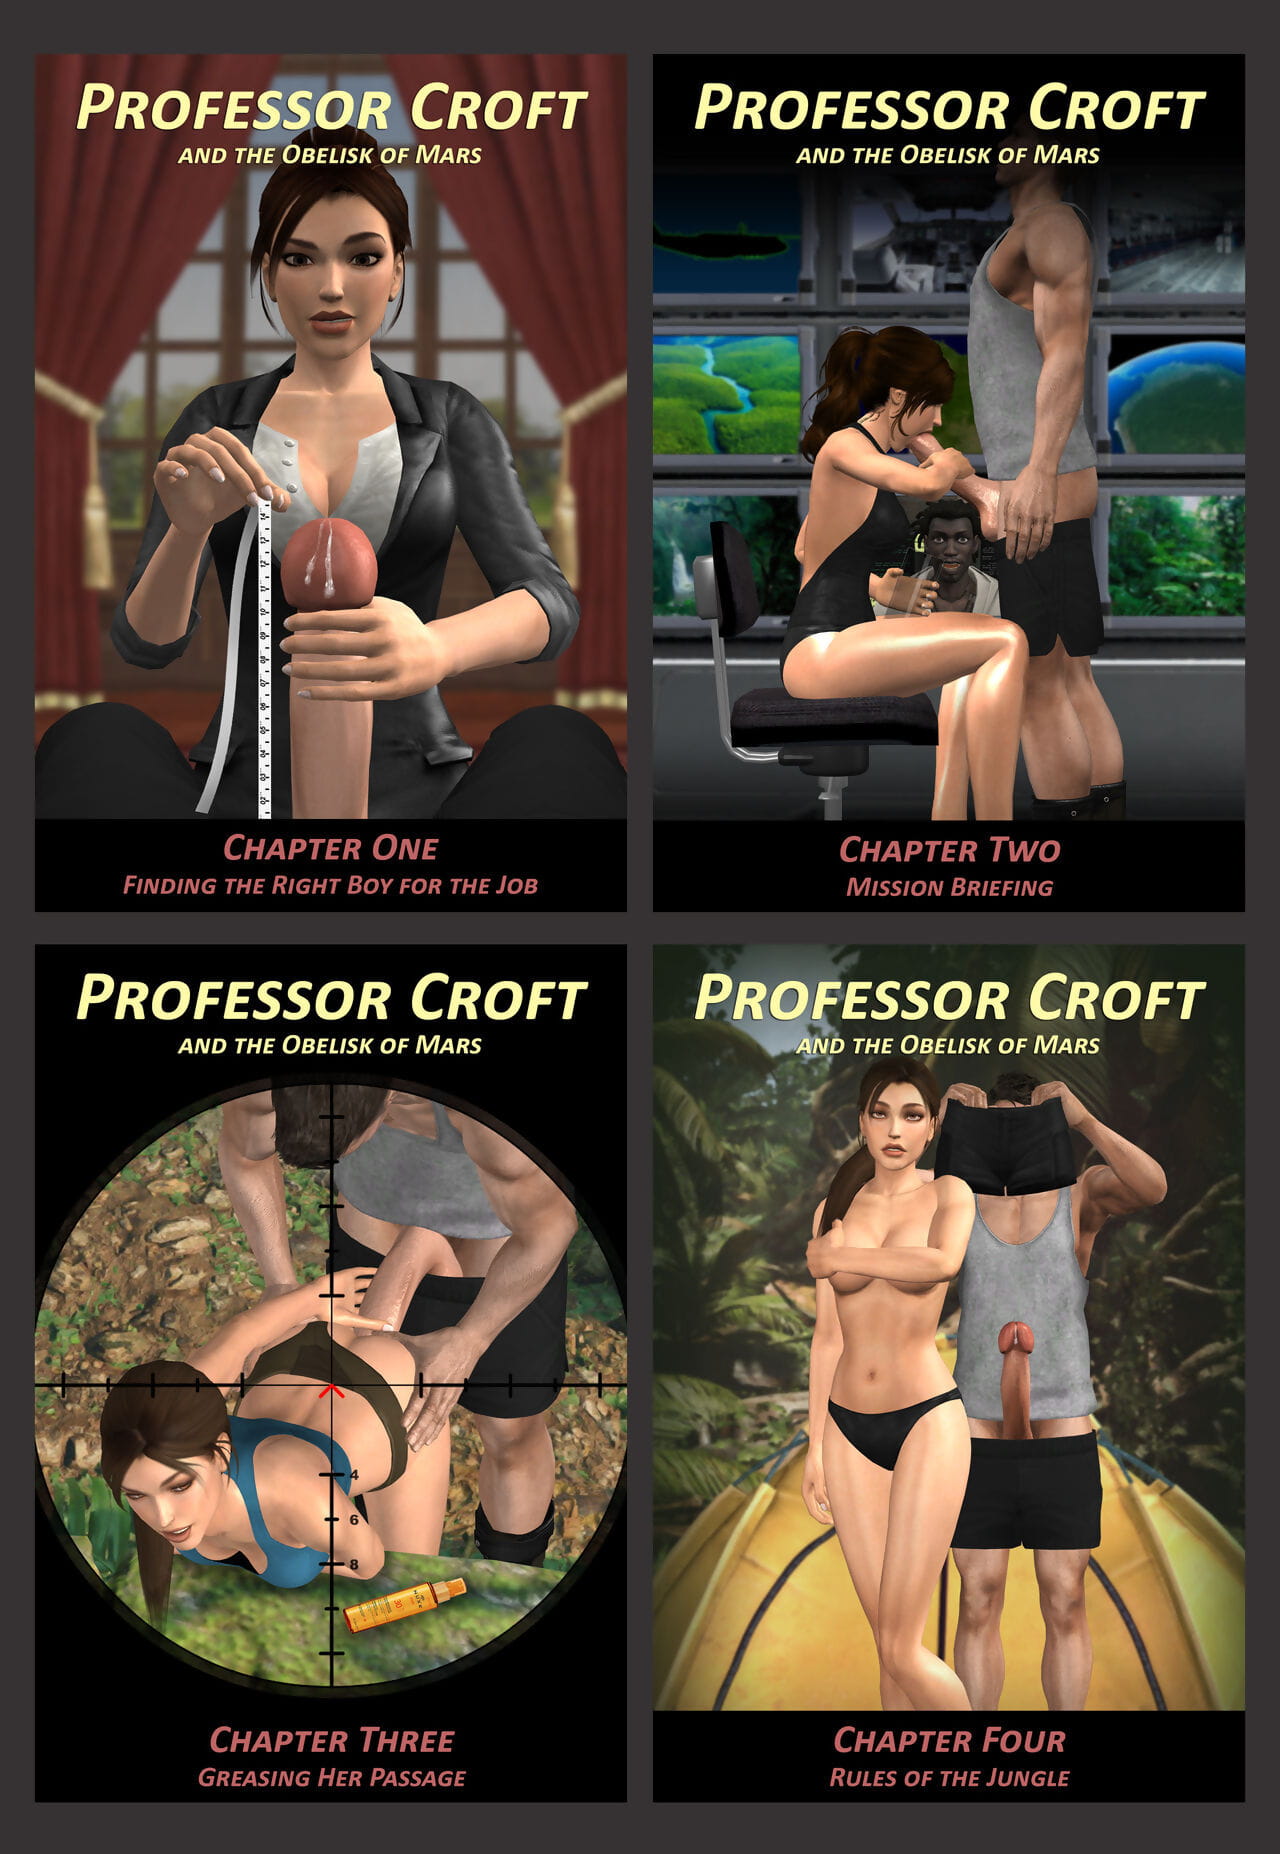 lctr ศาสตราจารย์ Croft แล้ว คน misogynistic บทเรียน page 1